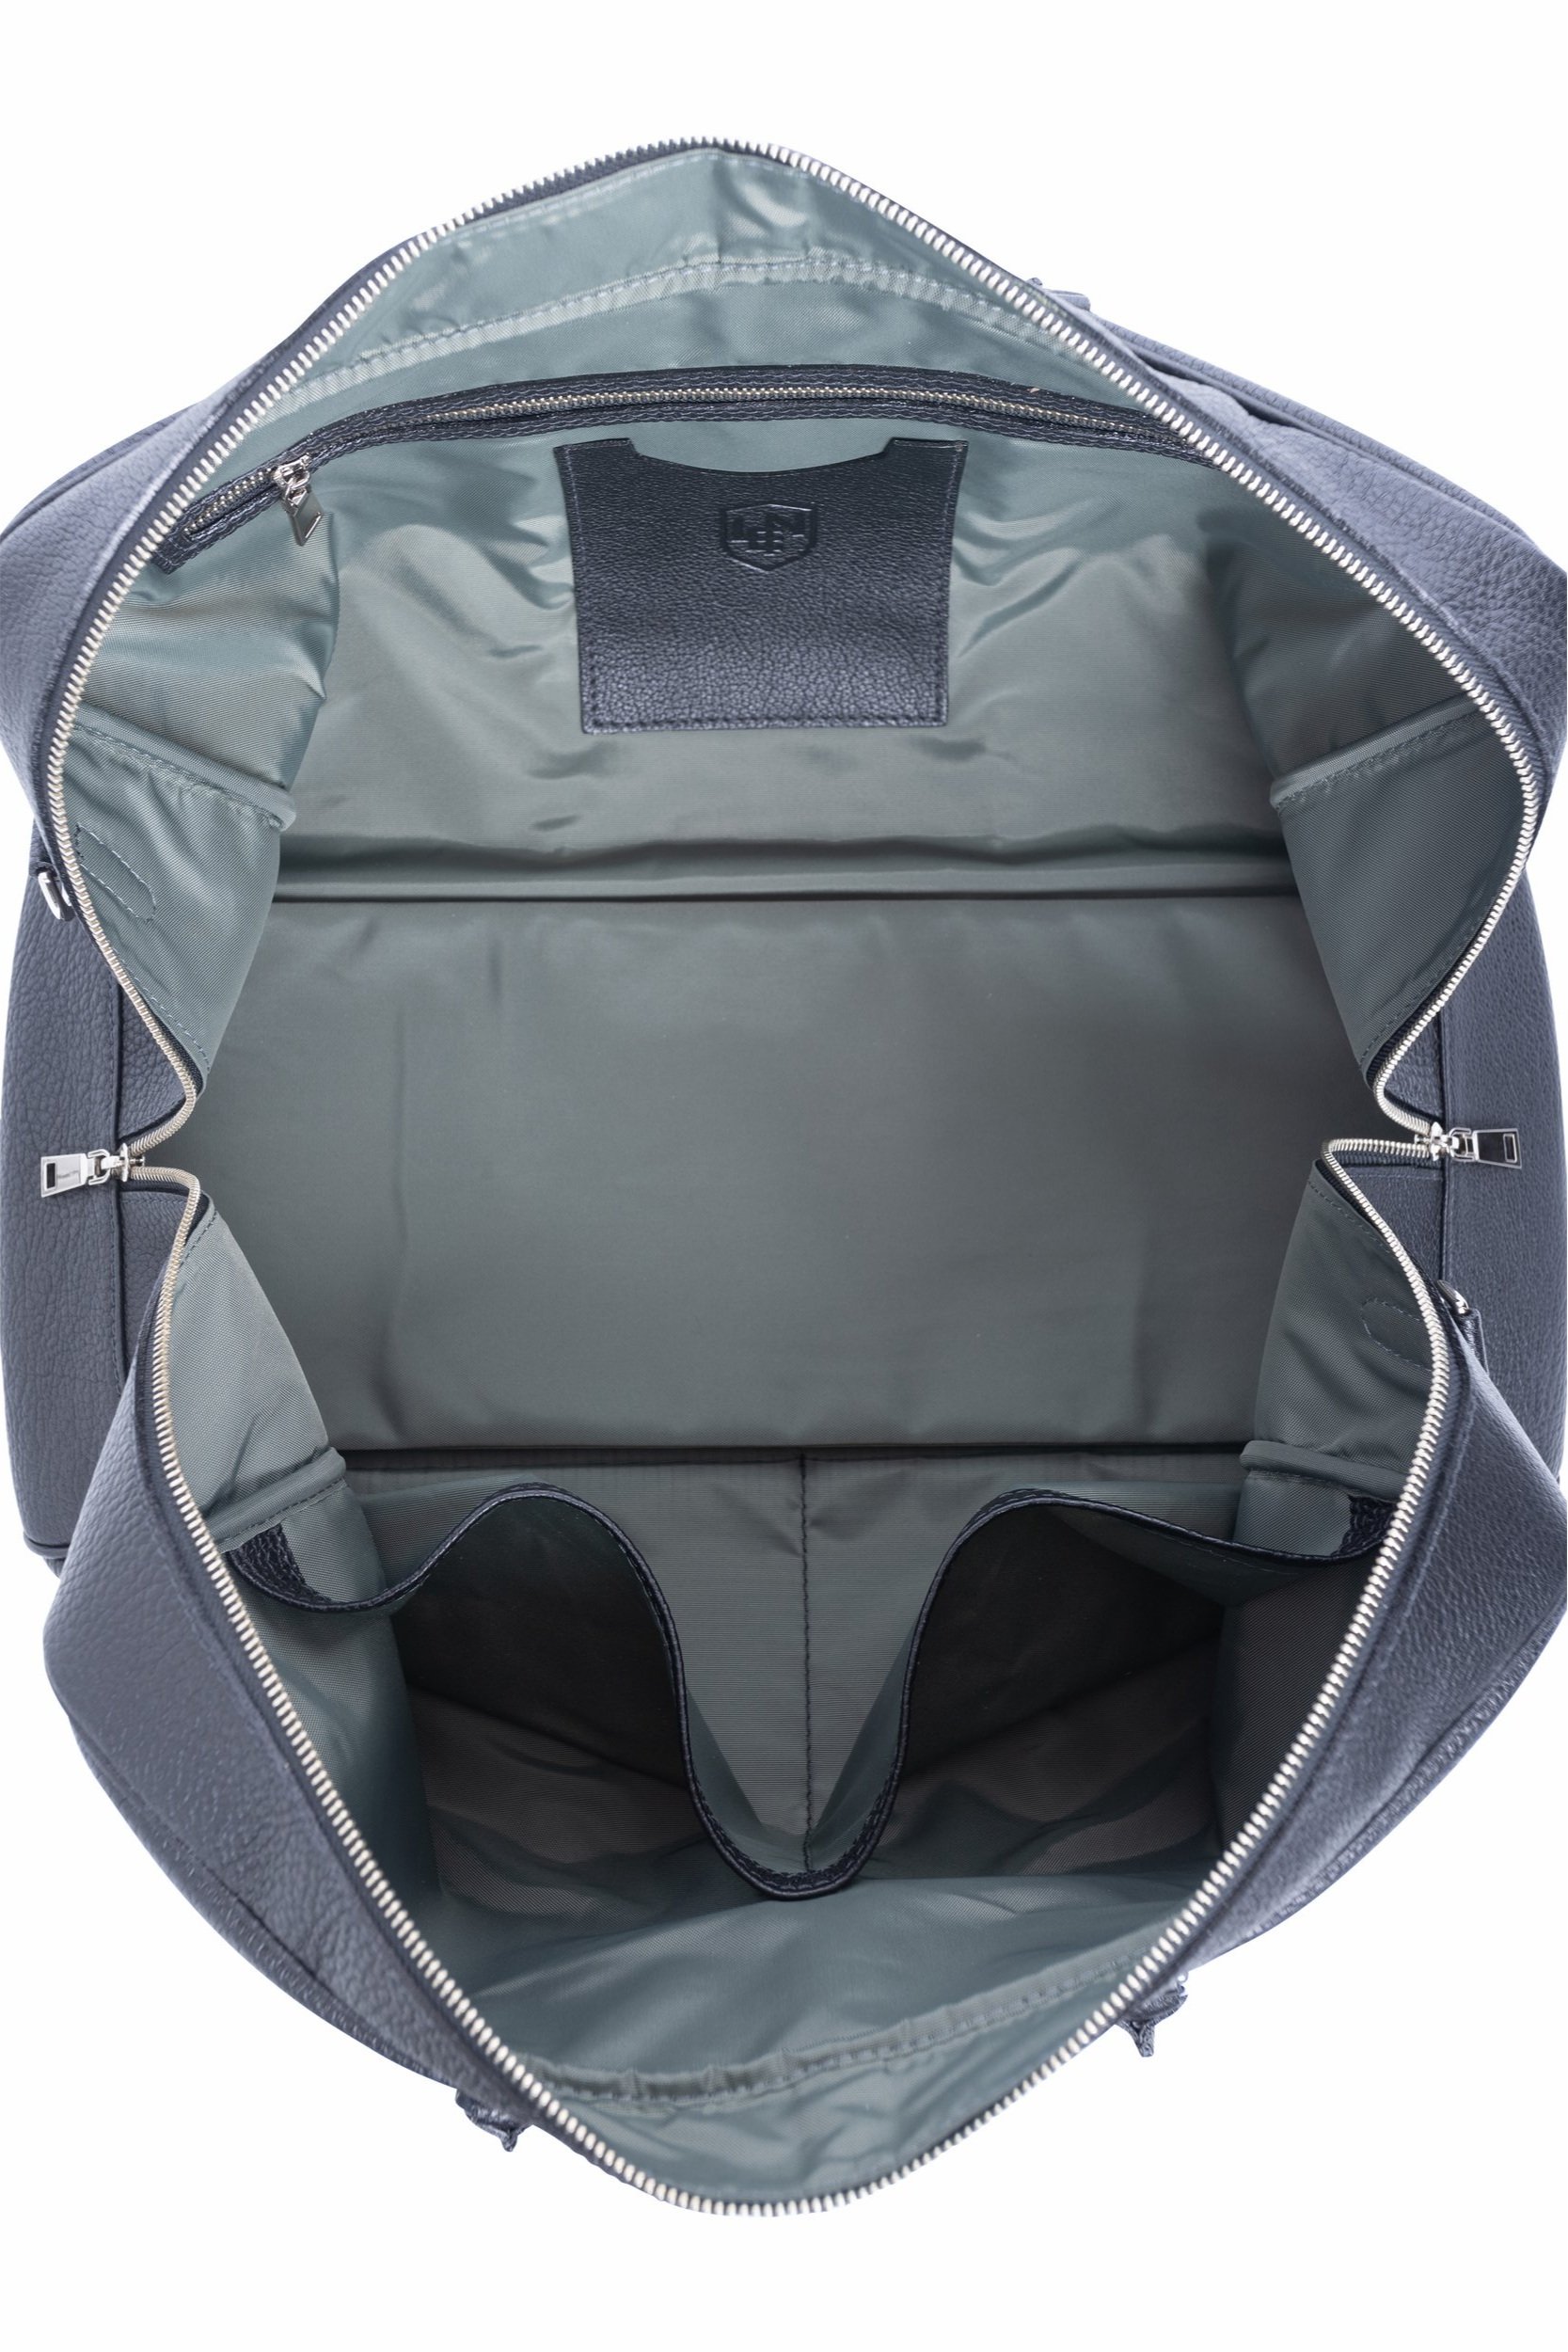 Wool & Ostrich Full Zip Duffel Bag in Oxford Grey — LEN Lifestyle